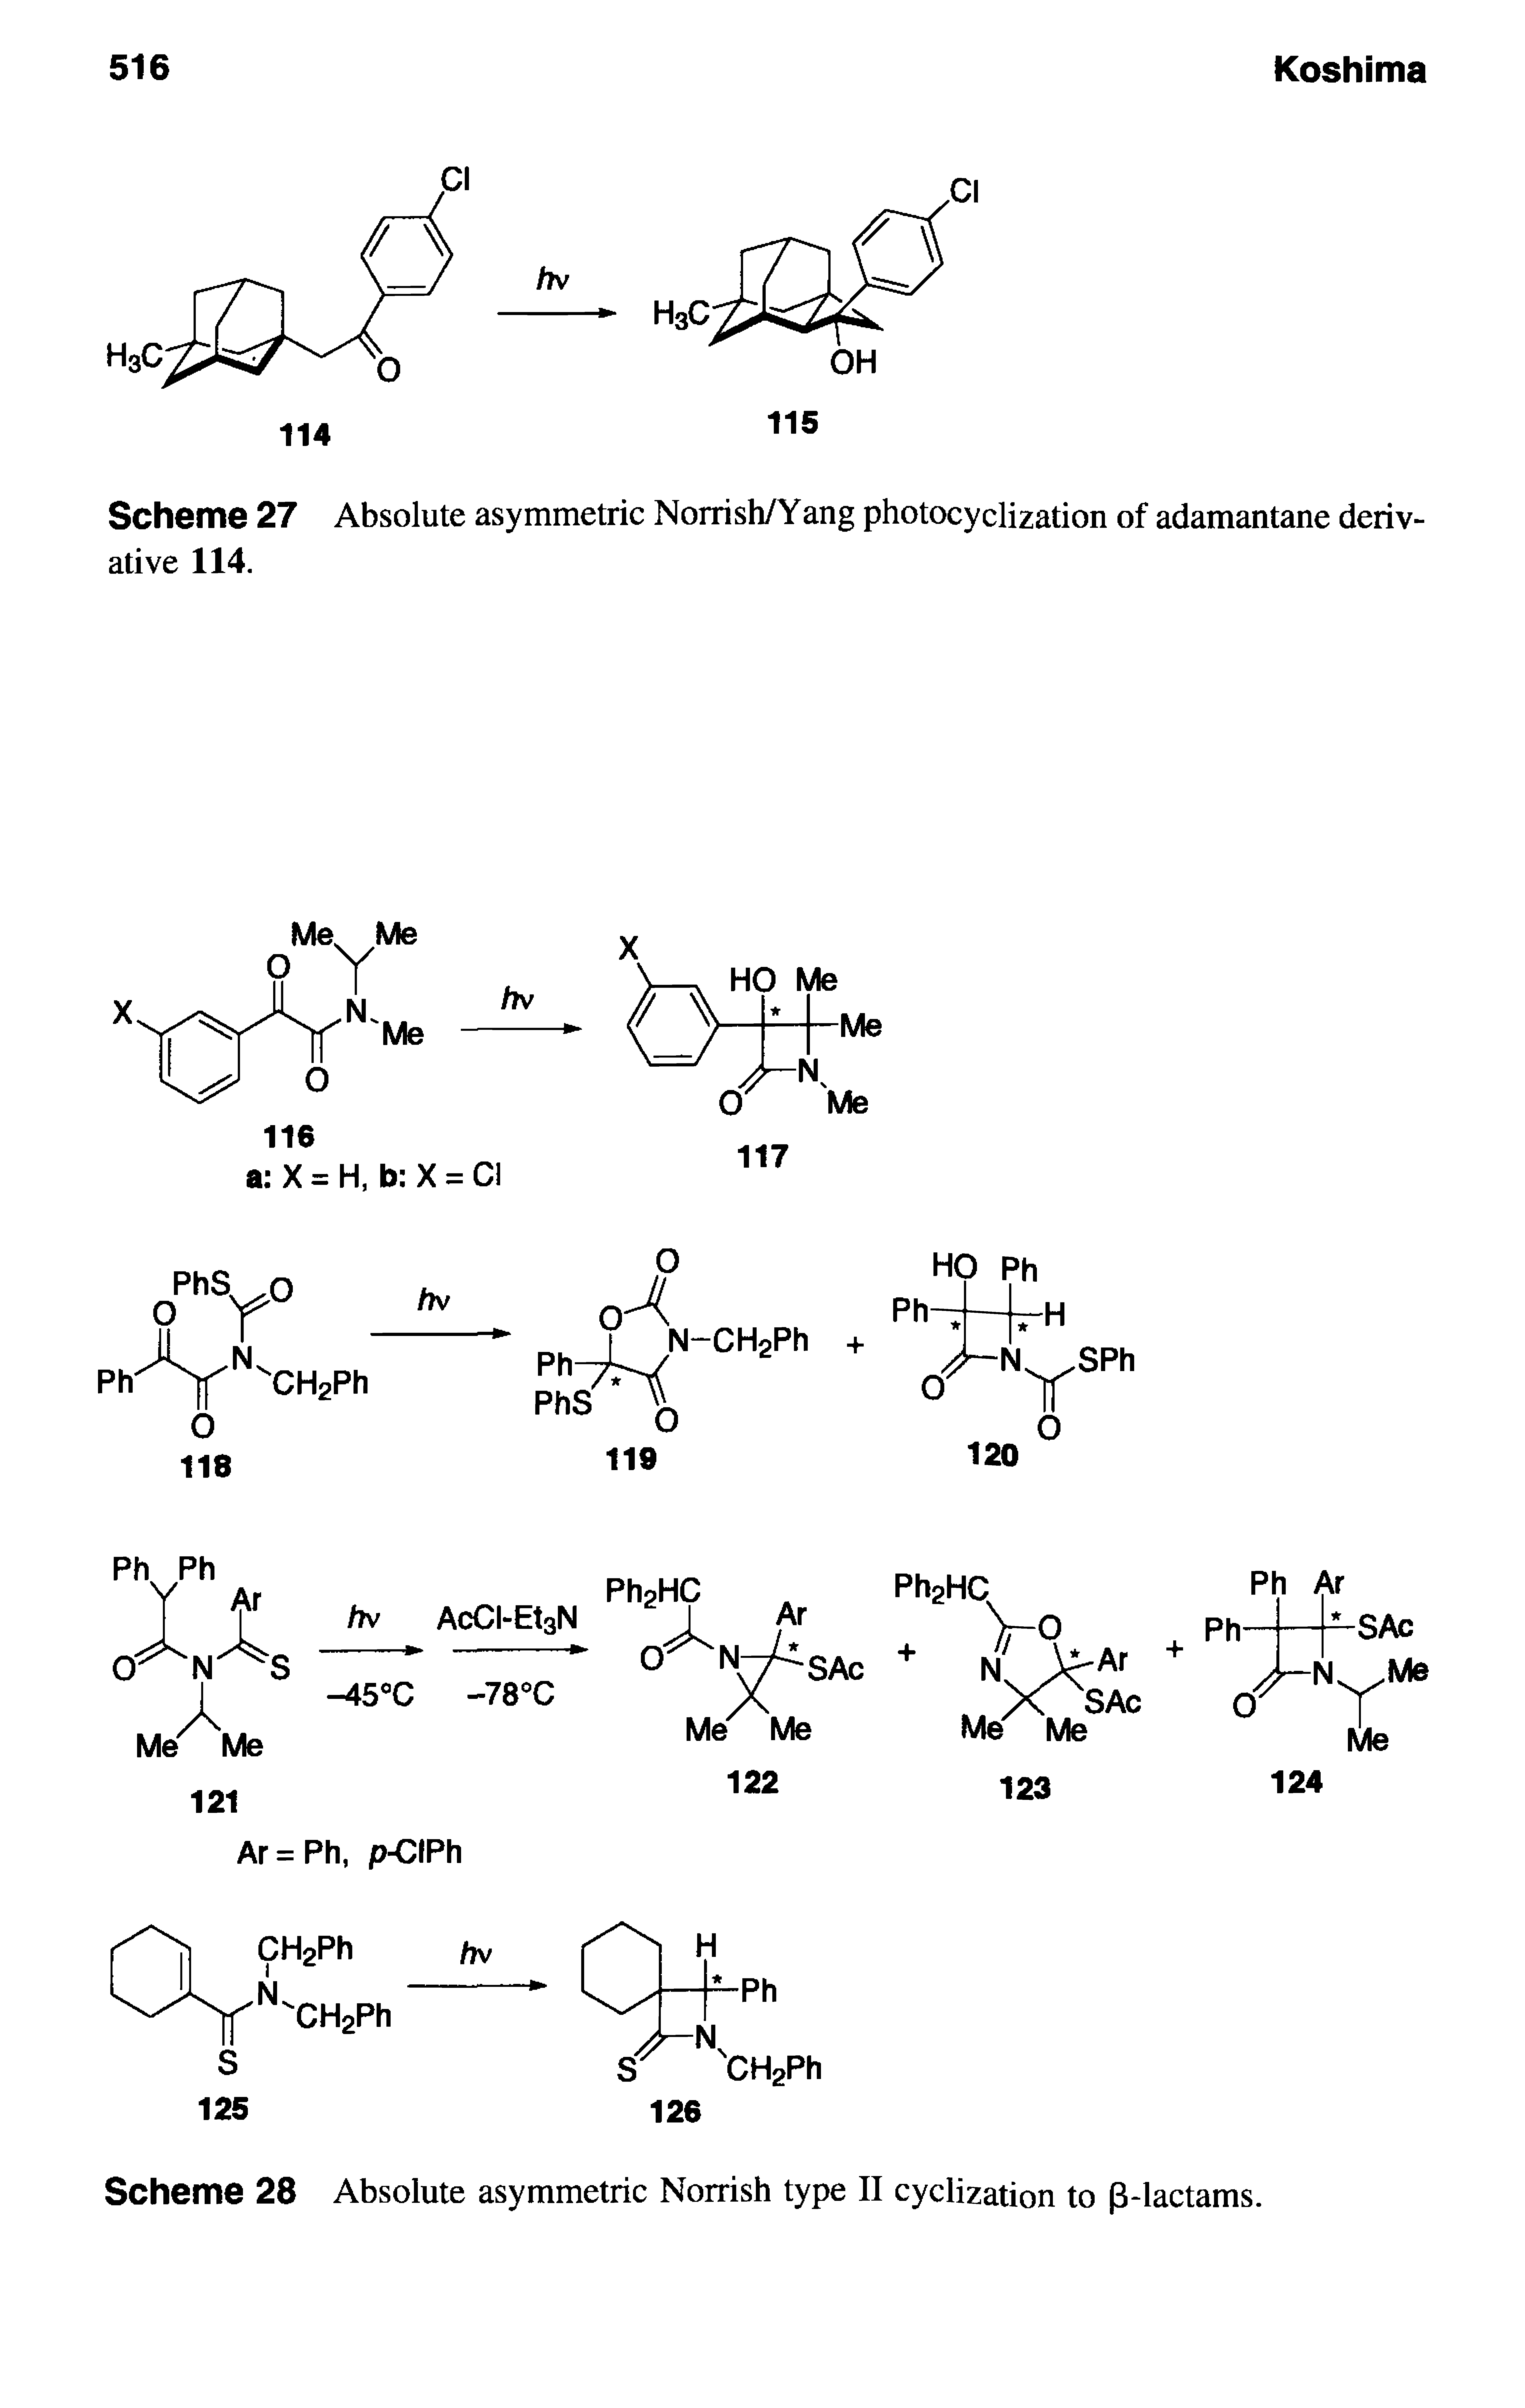 Scheme 27 Absolute asymmetric Norrish/Yang photocyclization of adamantane derivative 114.